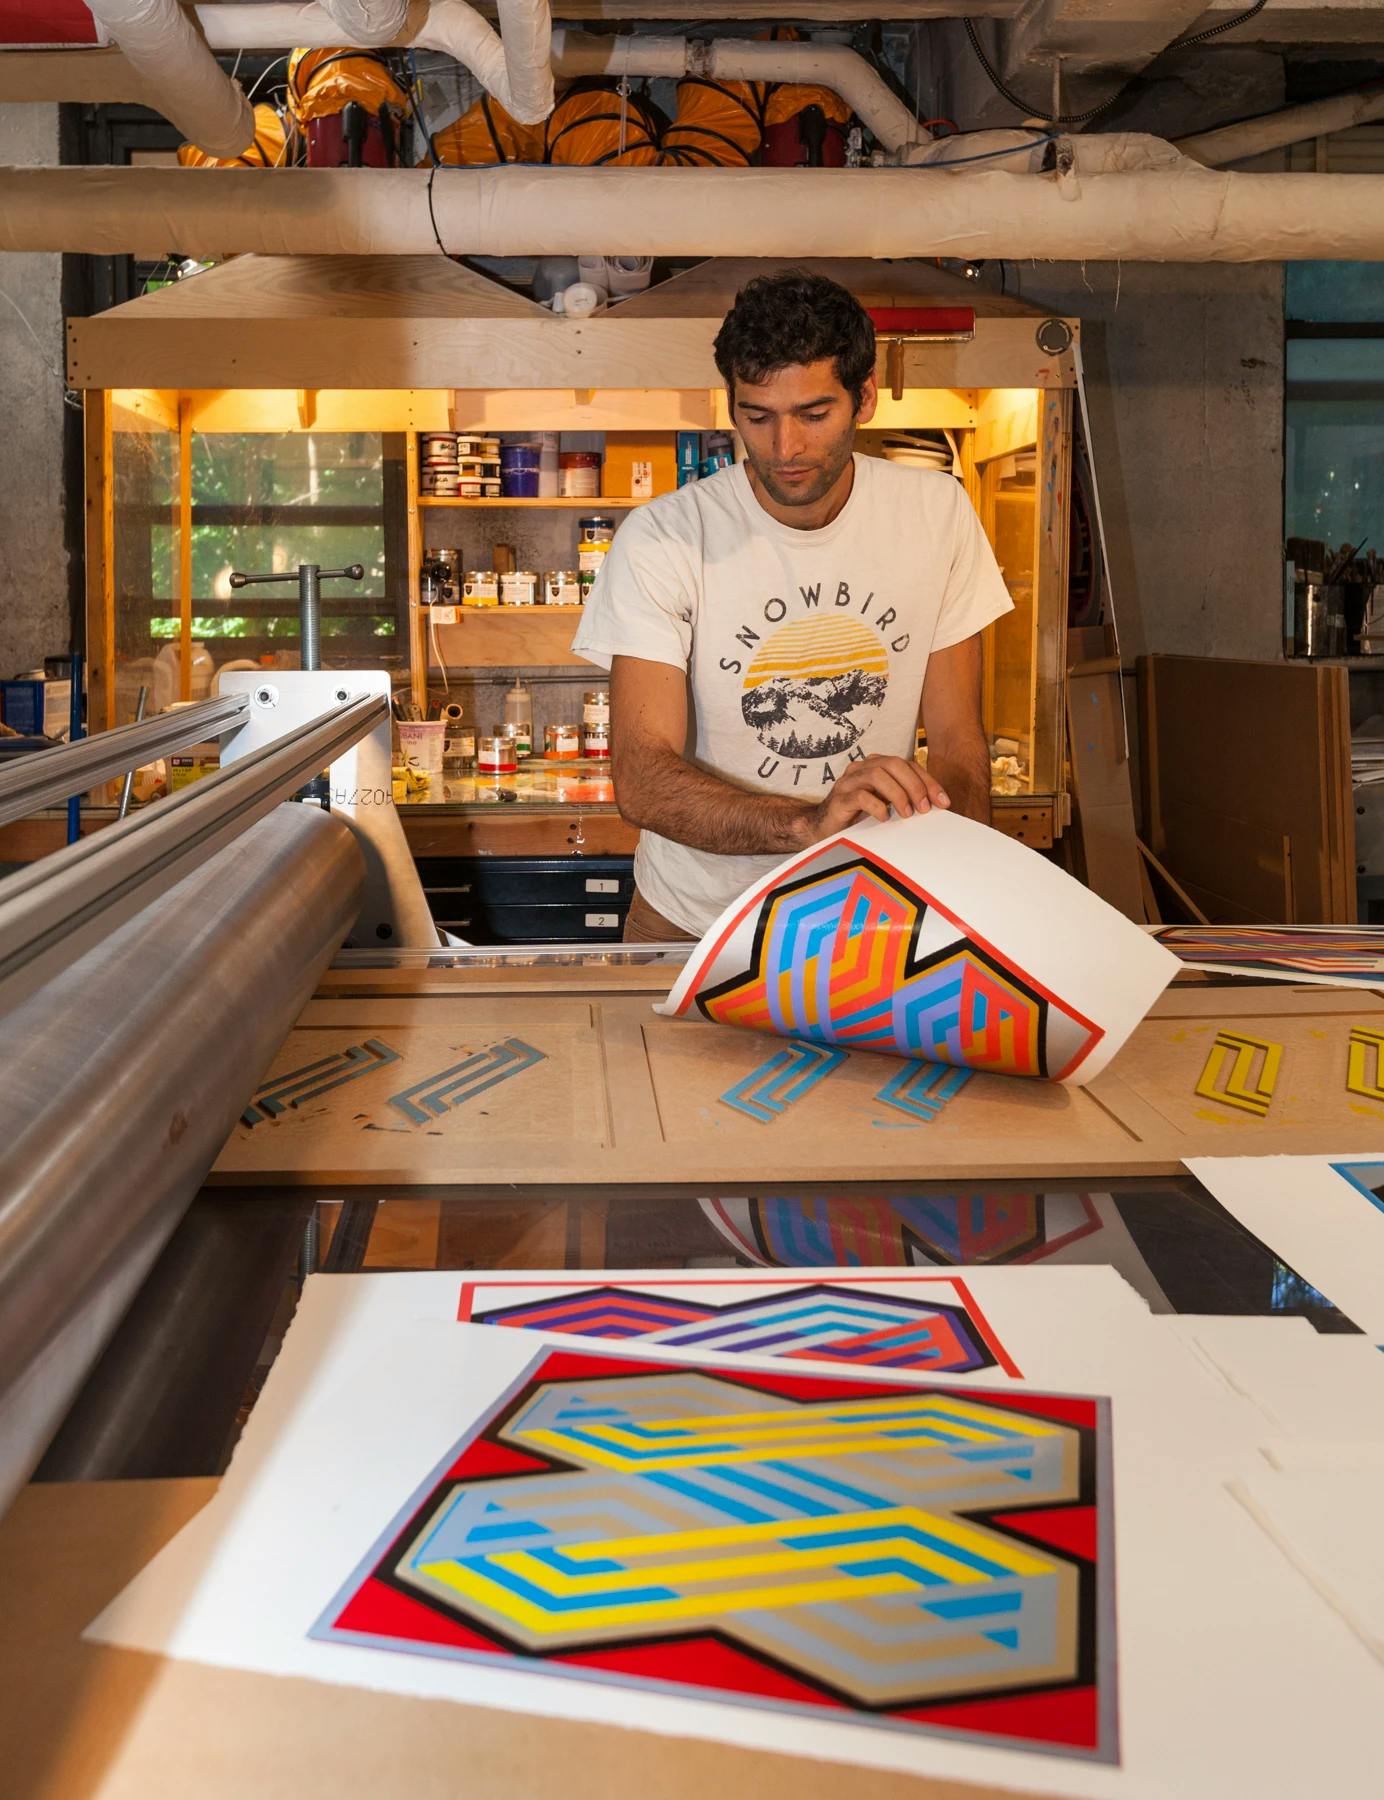 Artist Matt Neuman wearing a white t-shirt creating geometric, abstract prints in his studio.